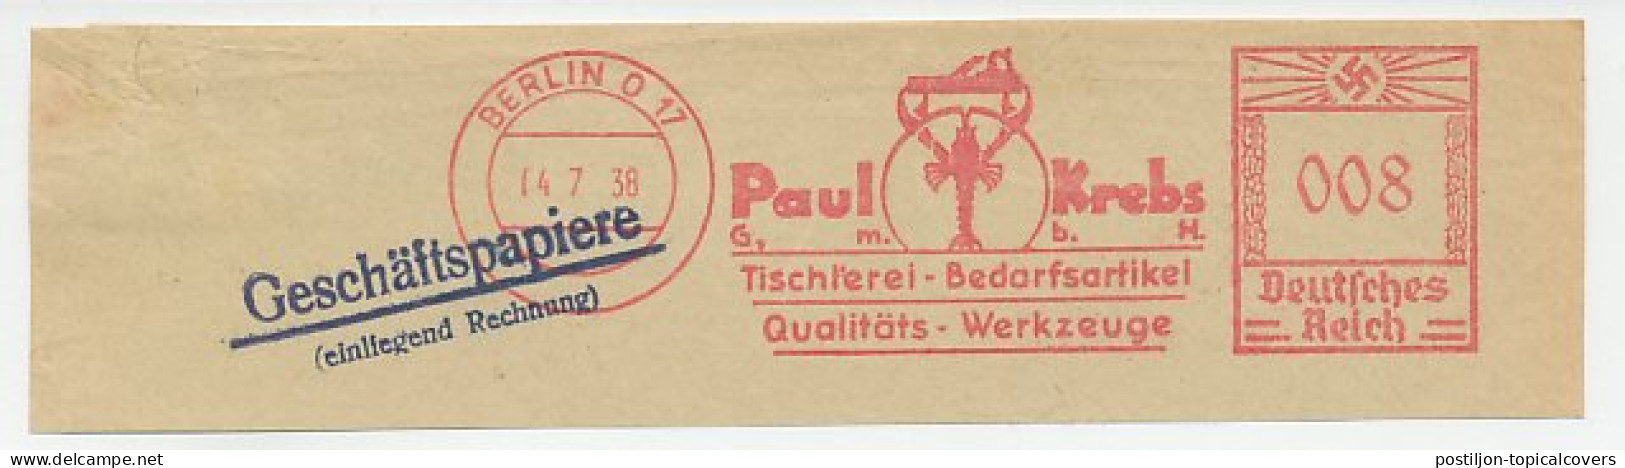 Meter Cut Deutsches Reich / Germany 1938 Lobster - Mundo Aquatico